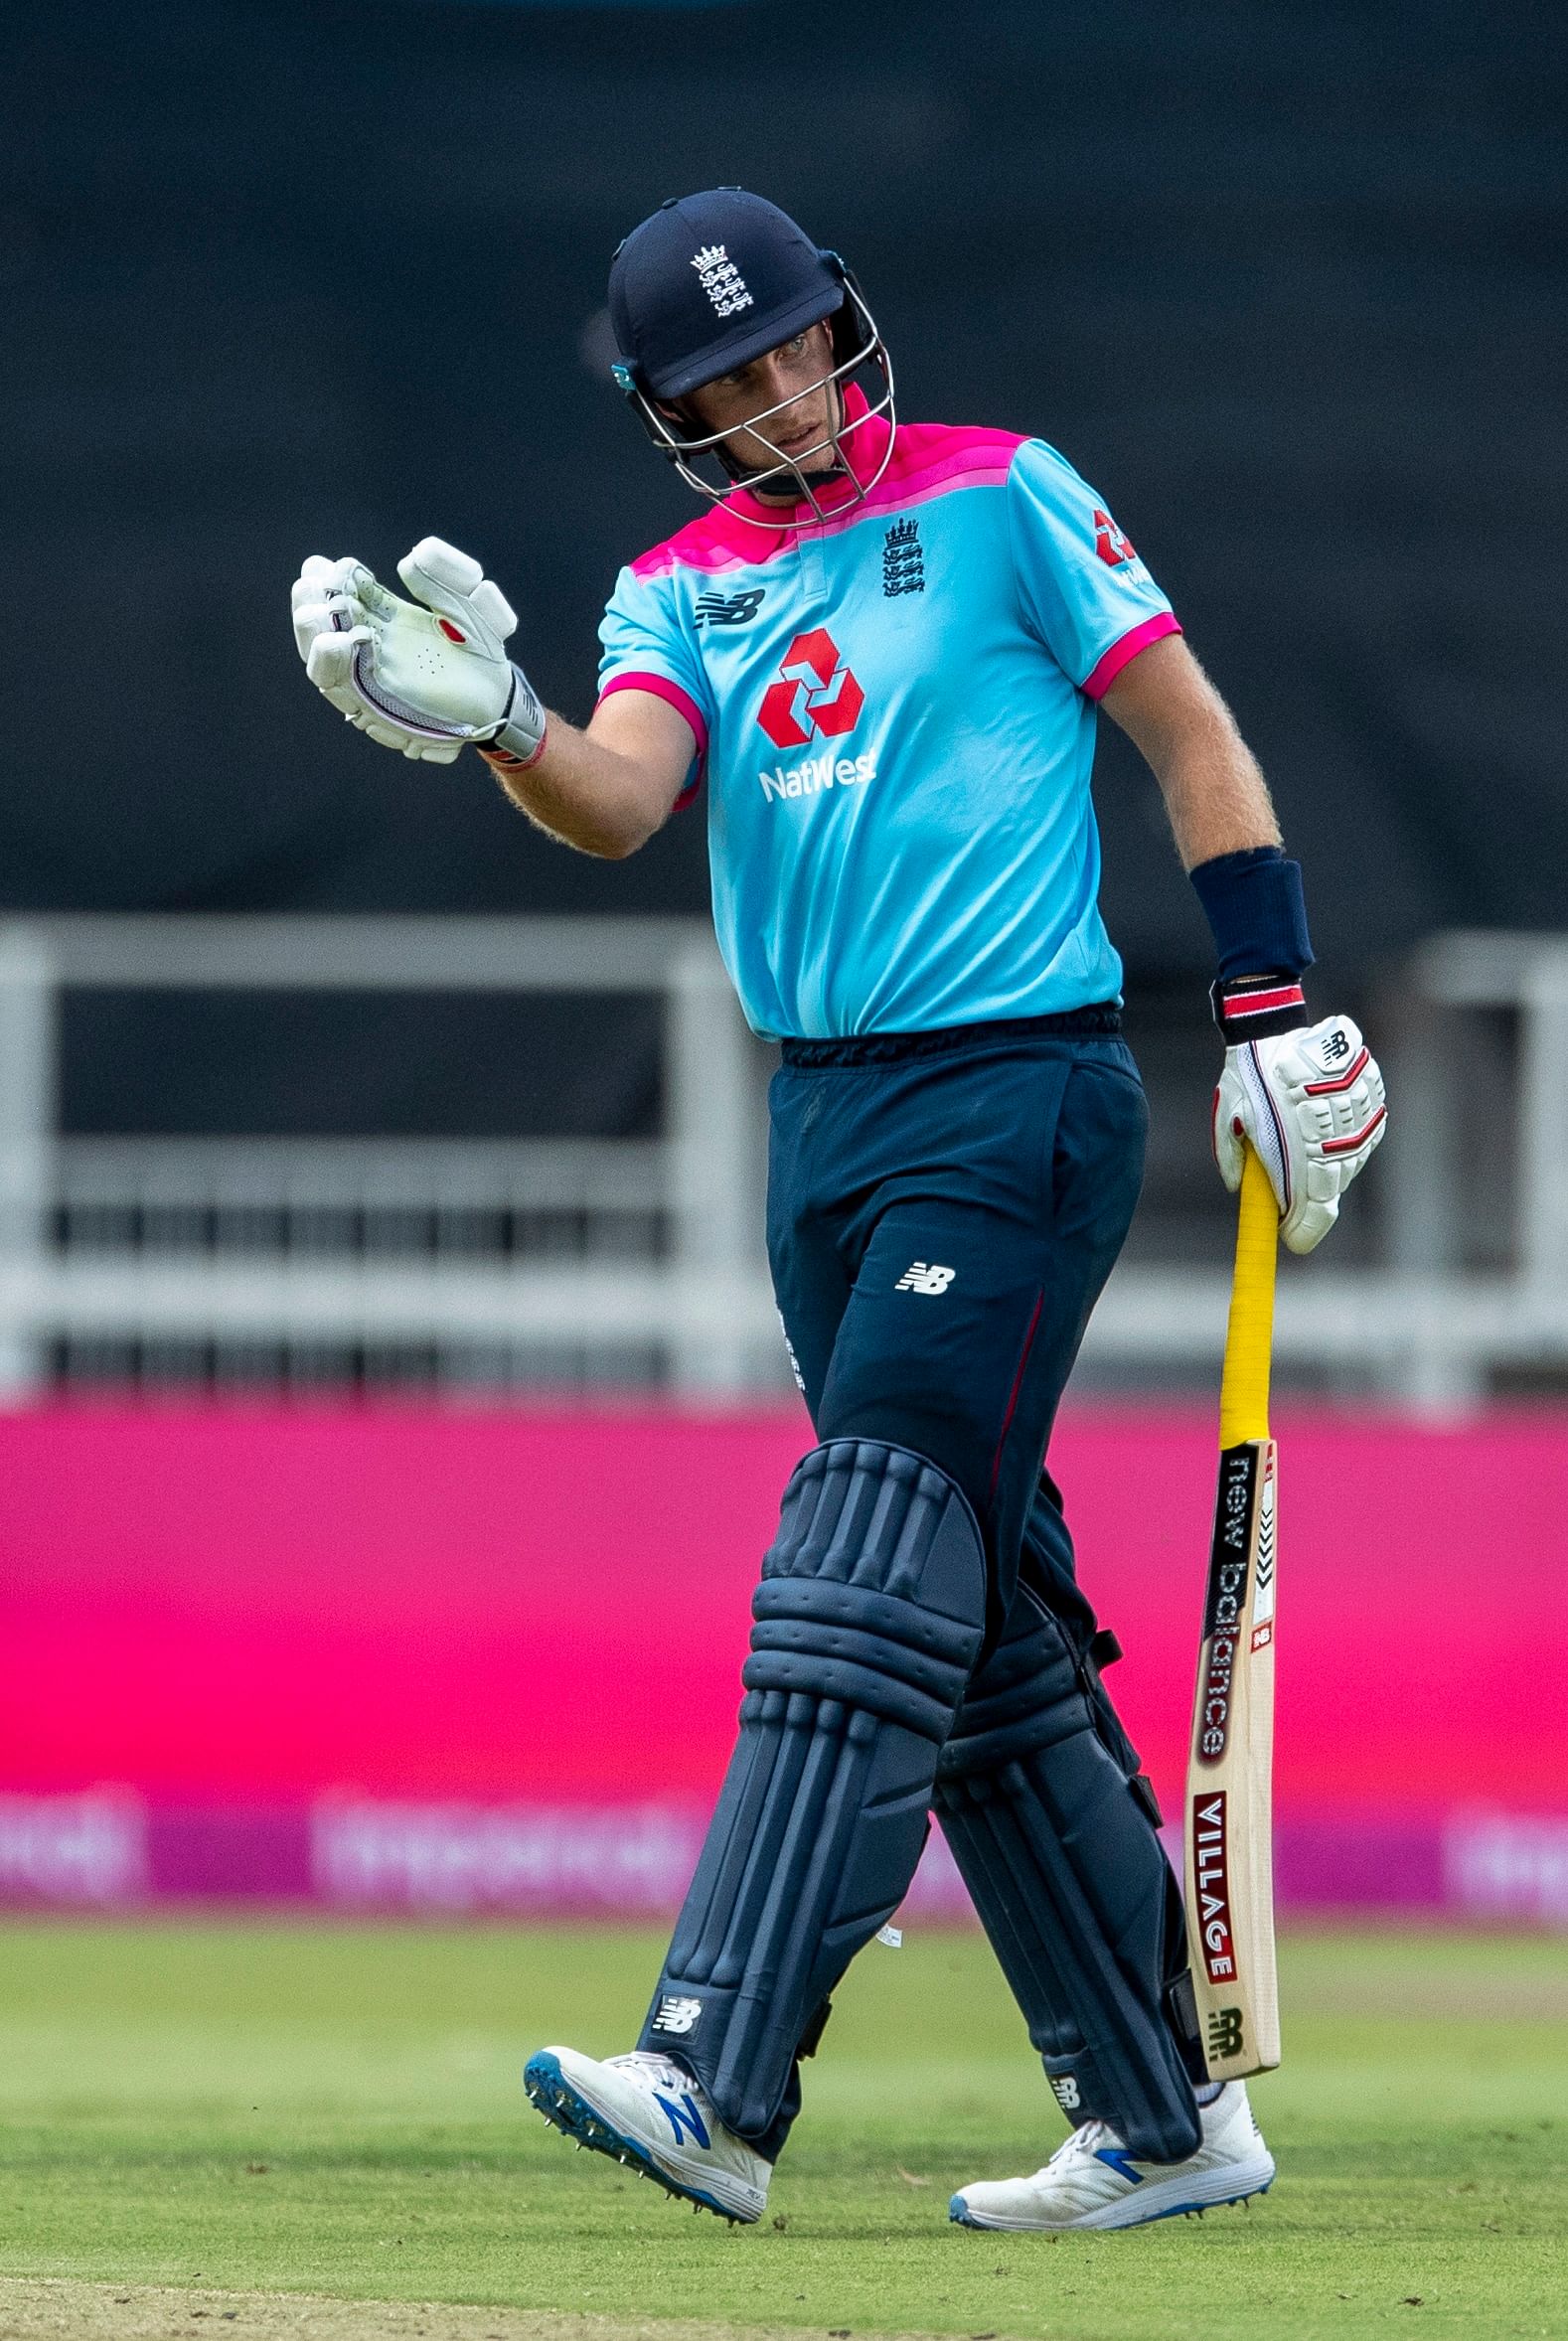  England's batsman Joe Root leaves the field after being dismissed by South Africa's bowler Tabraiz Shamsi. (Credit: AP Photo)